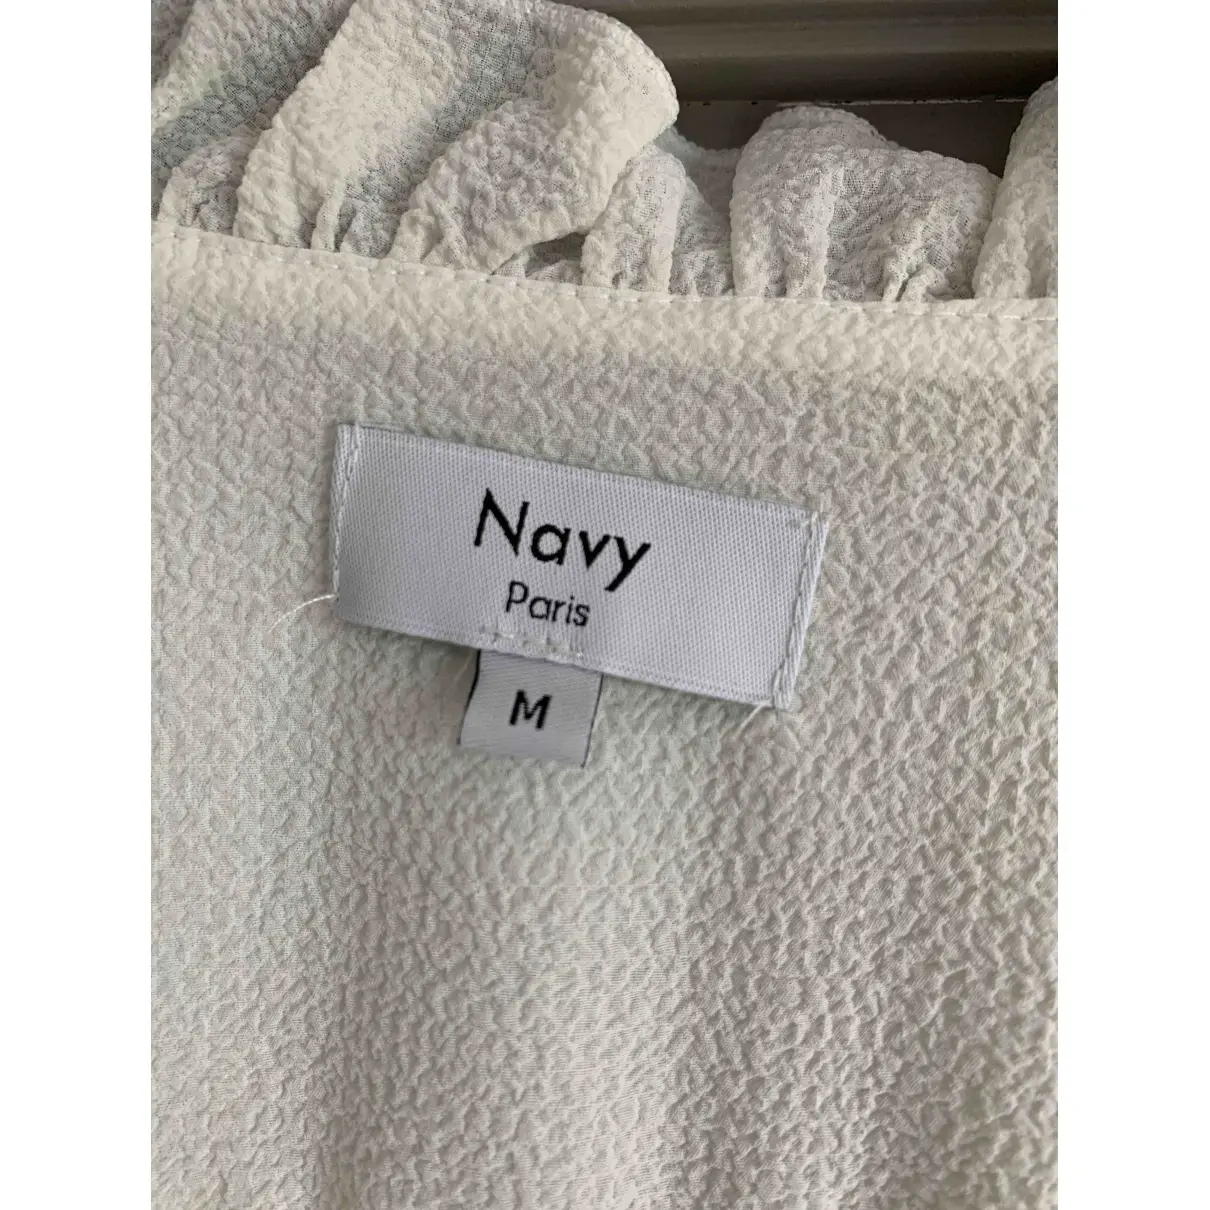 Buy Navy Paris White Polyester Top online